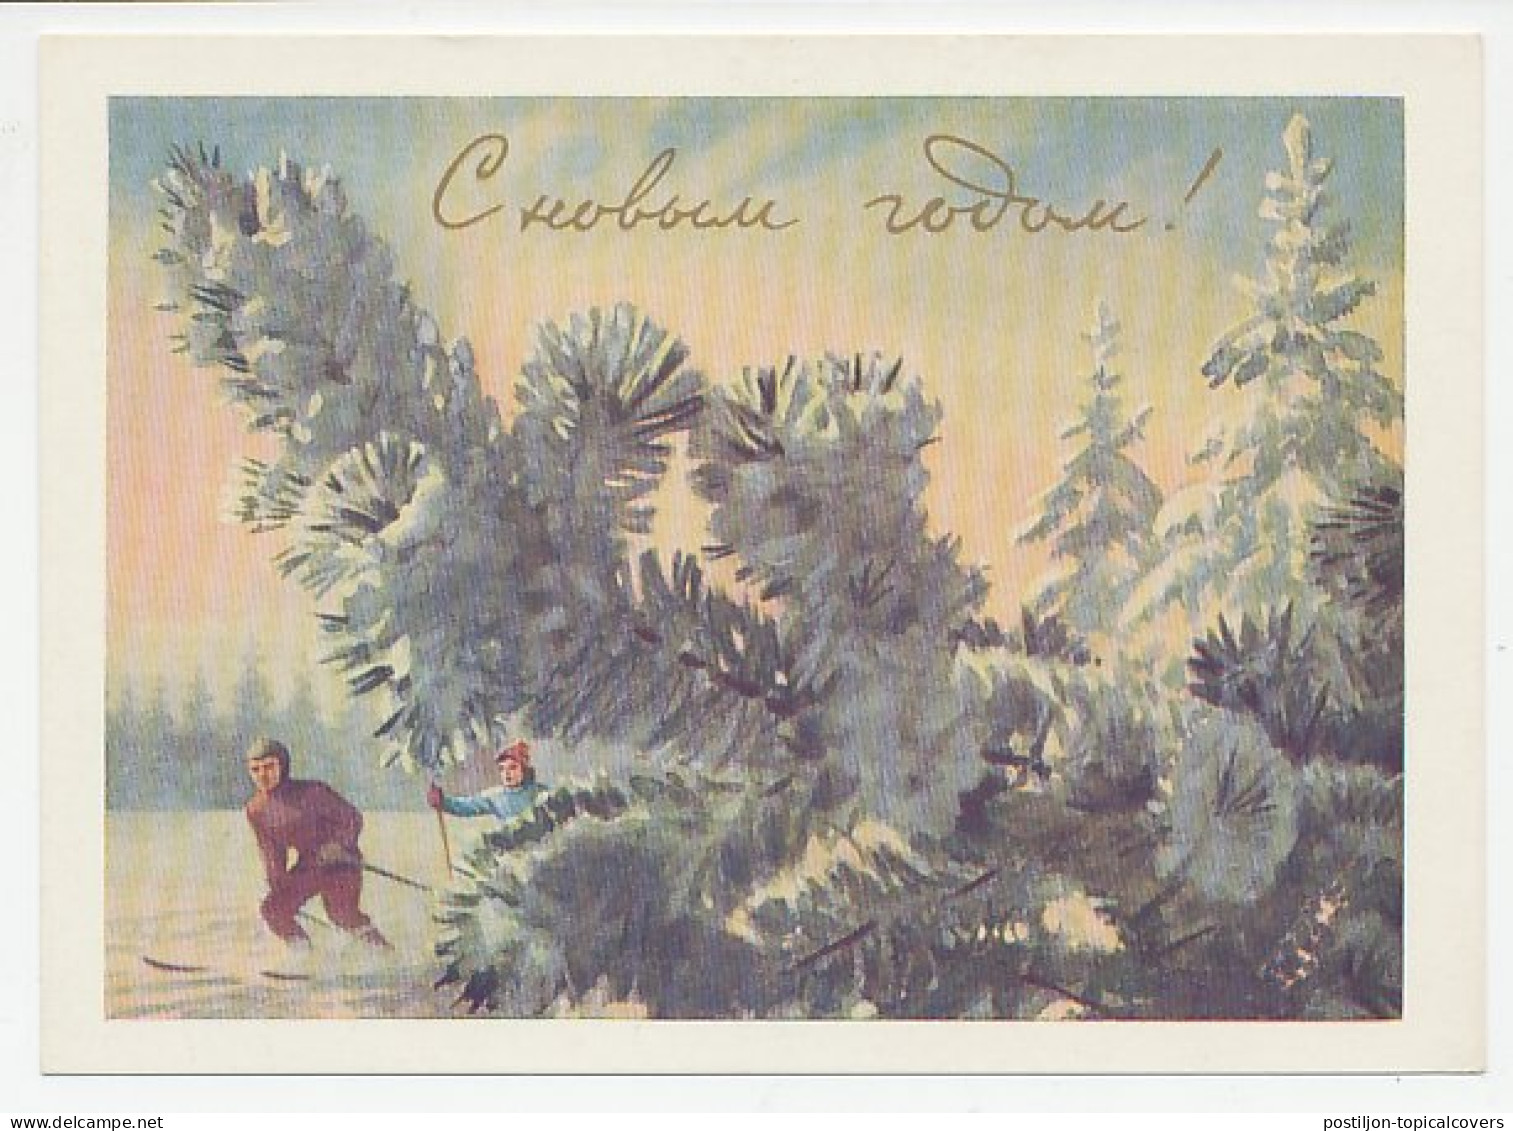 Postal Stationery Soviet Union 1959 Skiing - Winter (Varia)